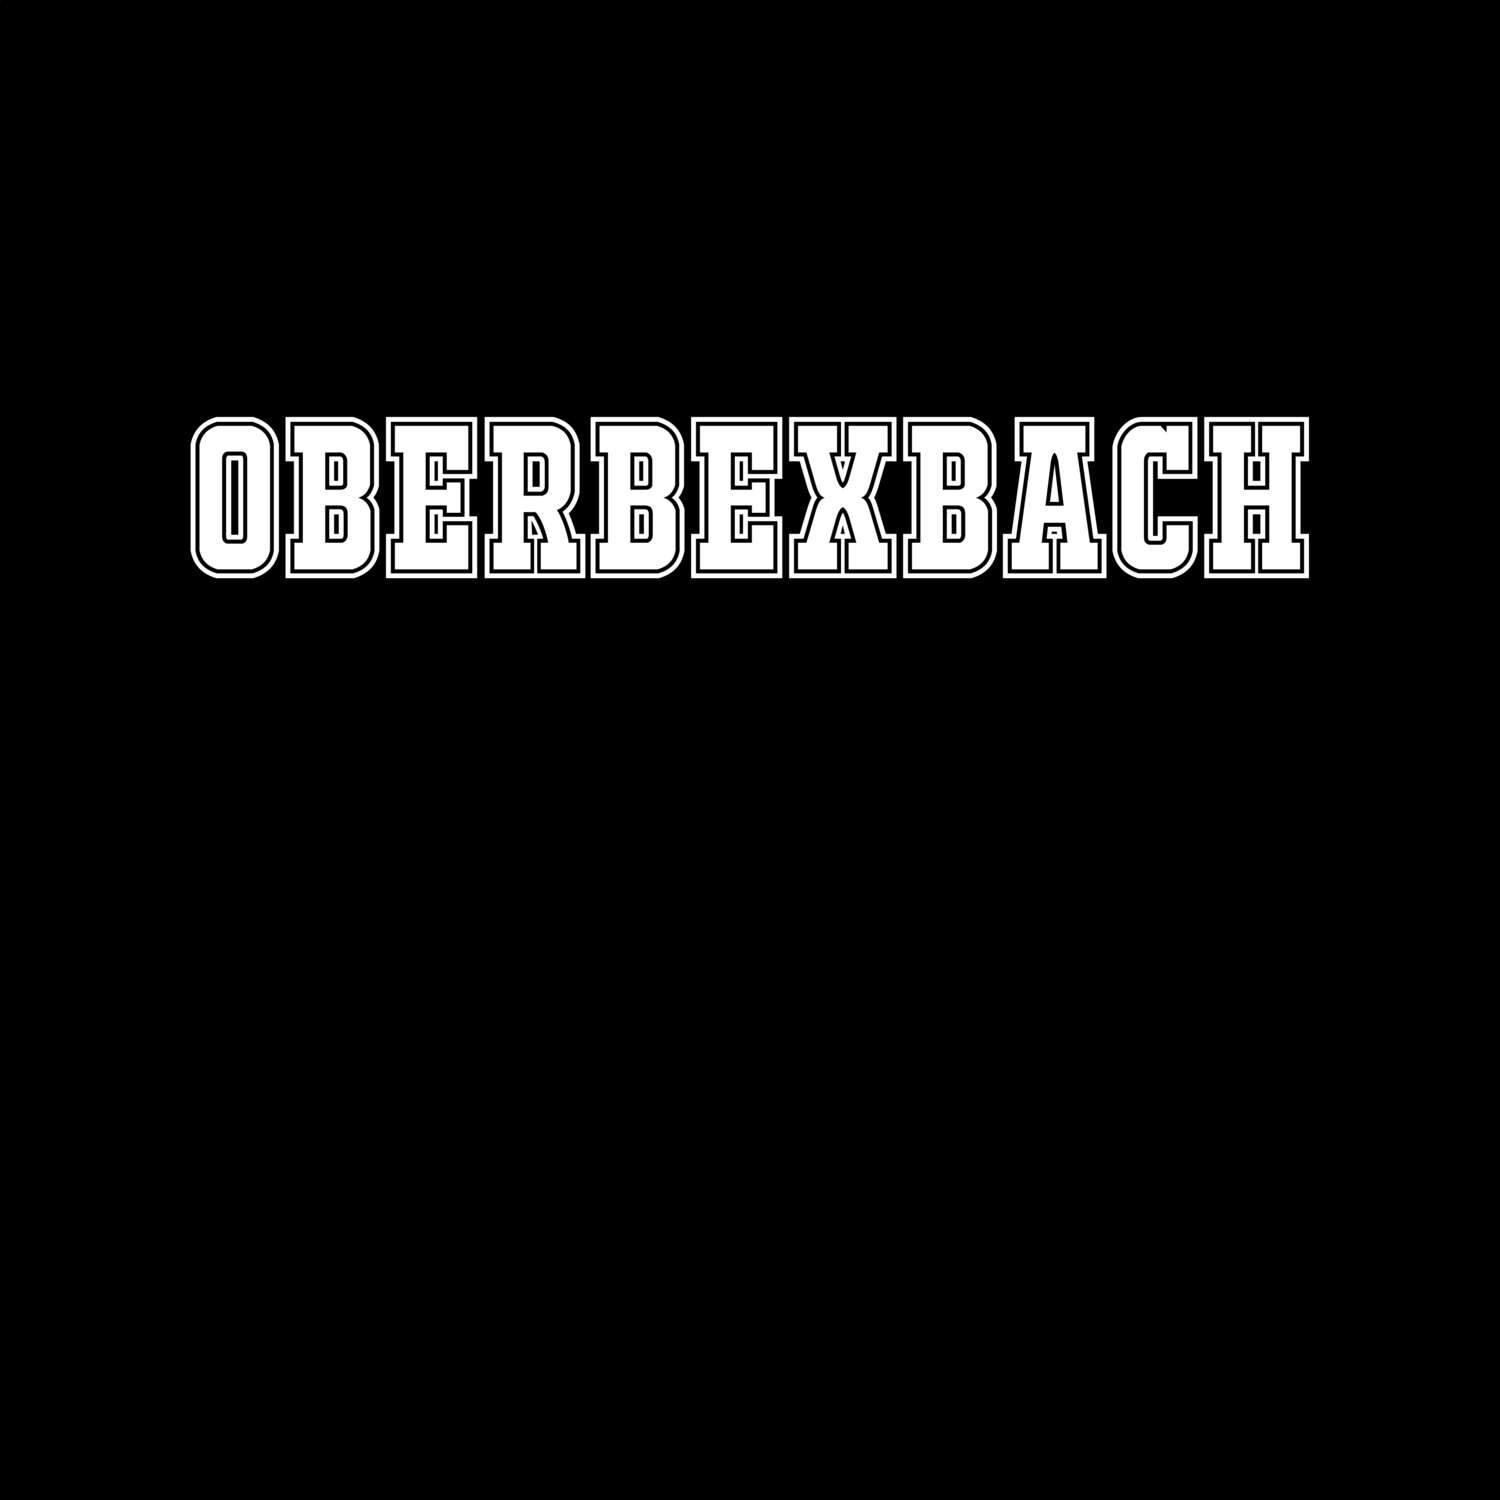 Oberbexbach T-Shirt »Classic«